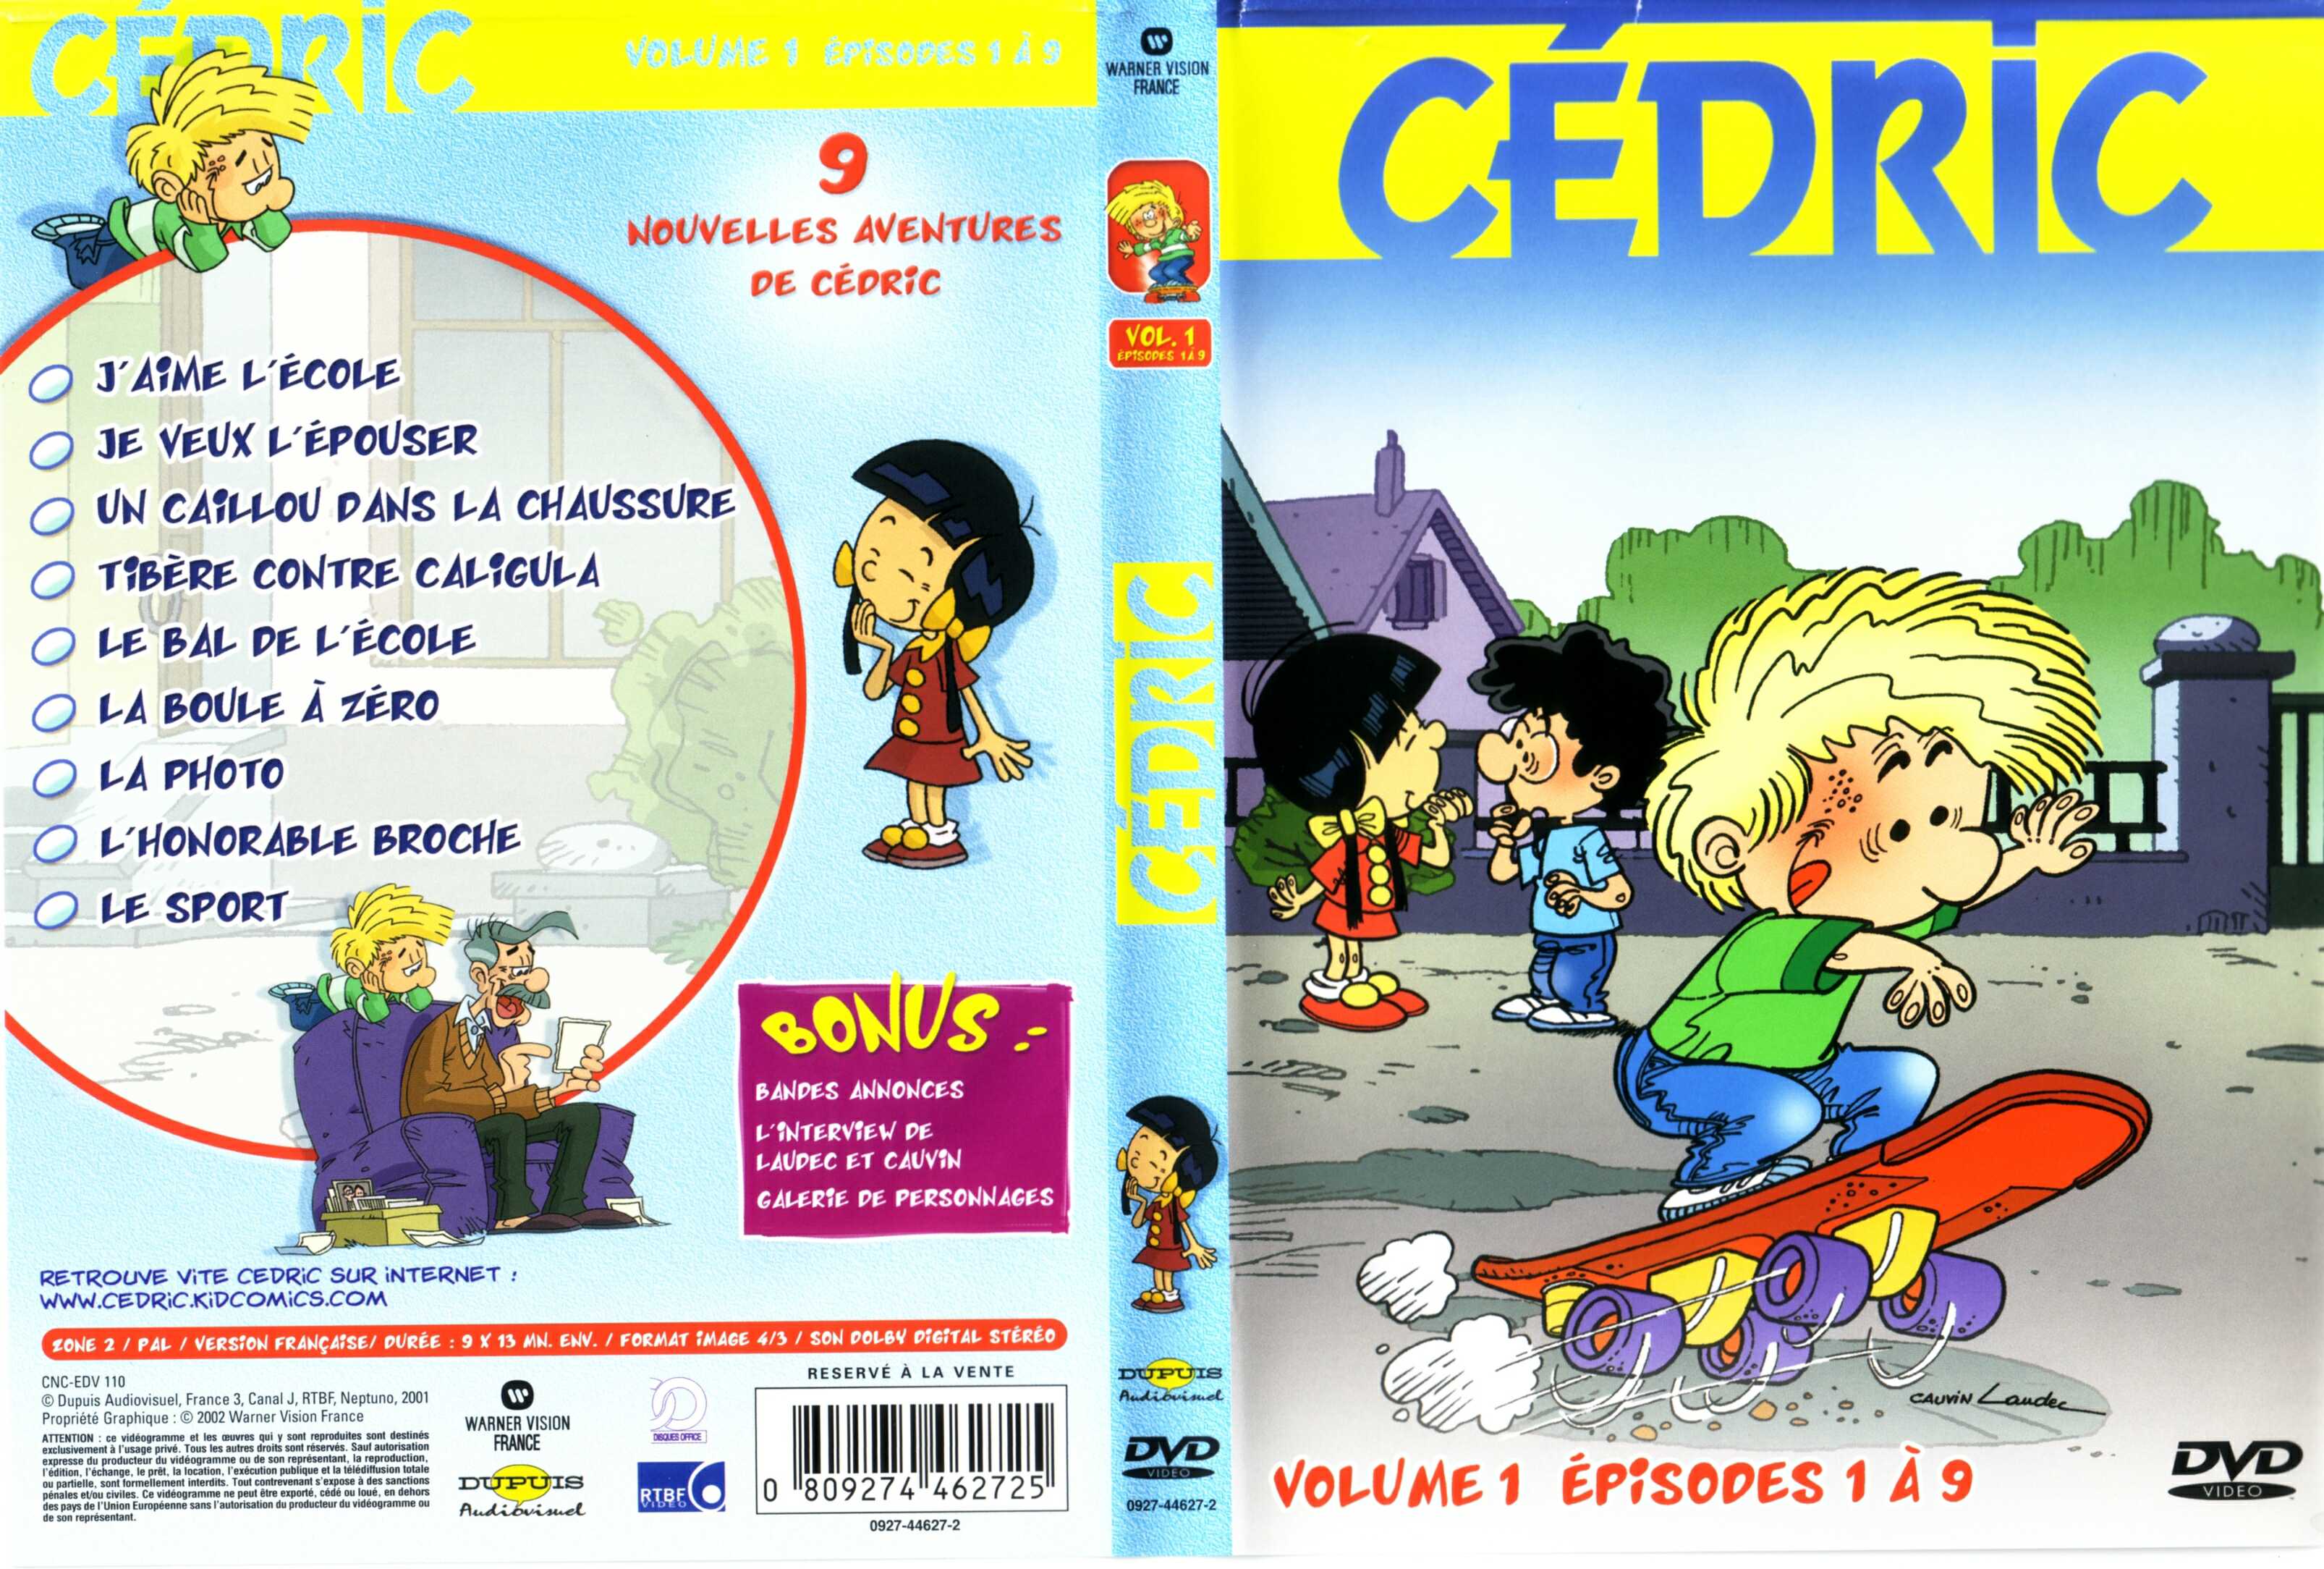 Jaquette DVD Cdric vol 1